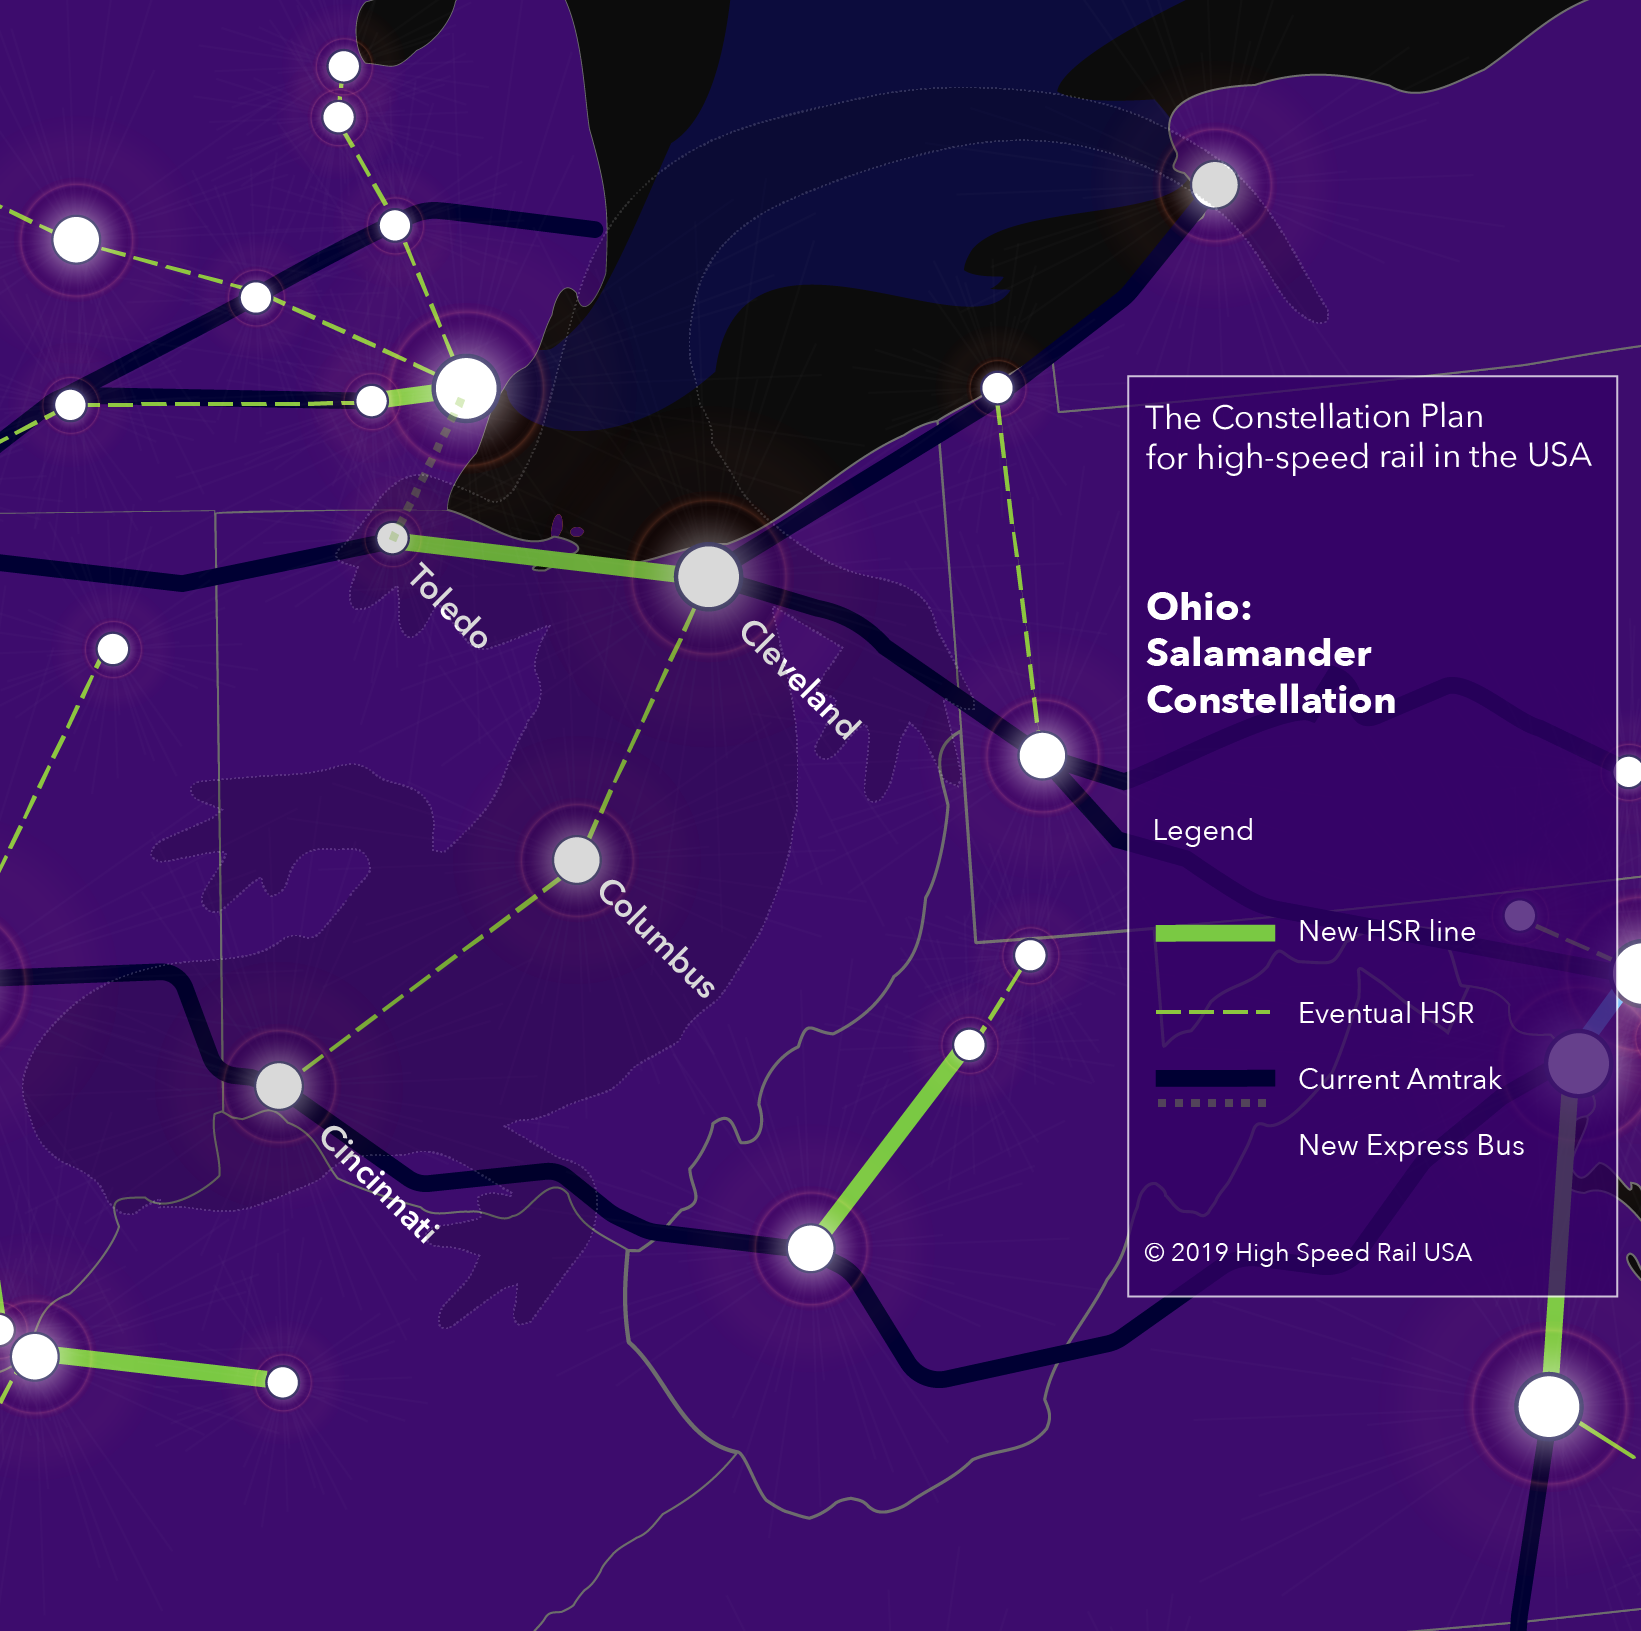 Ohio - The Salamander Constellation for high-speed rail